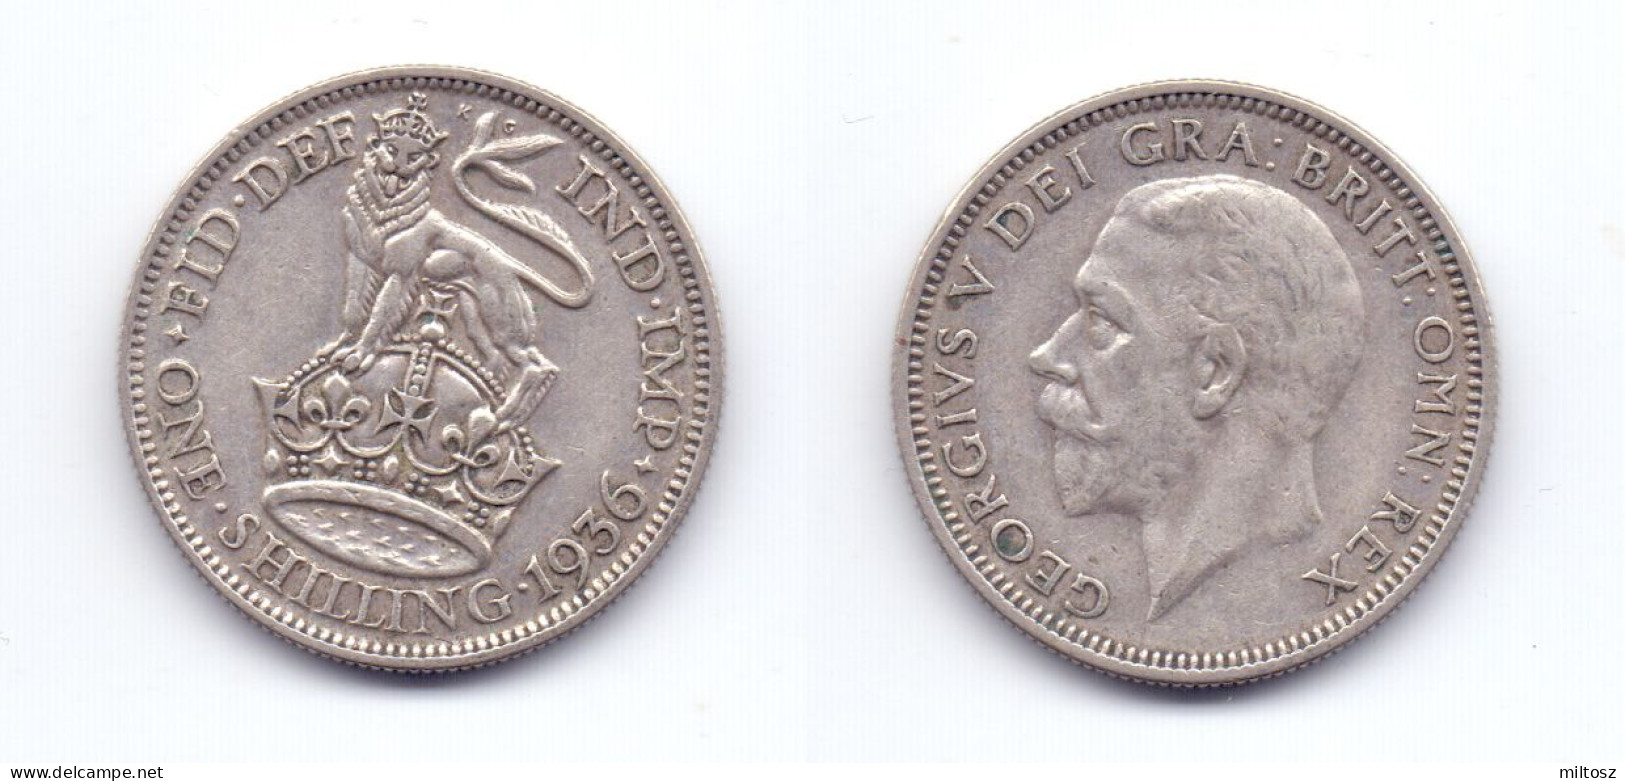 Great Britain 1 Shilling 1936 - I. 1 Shilling